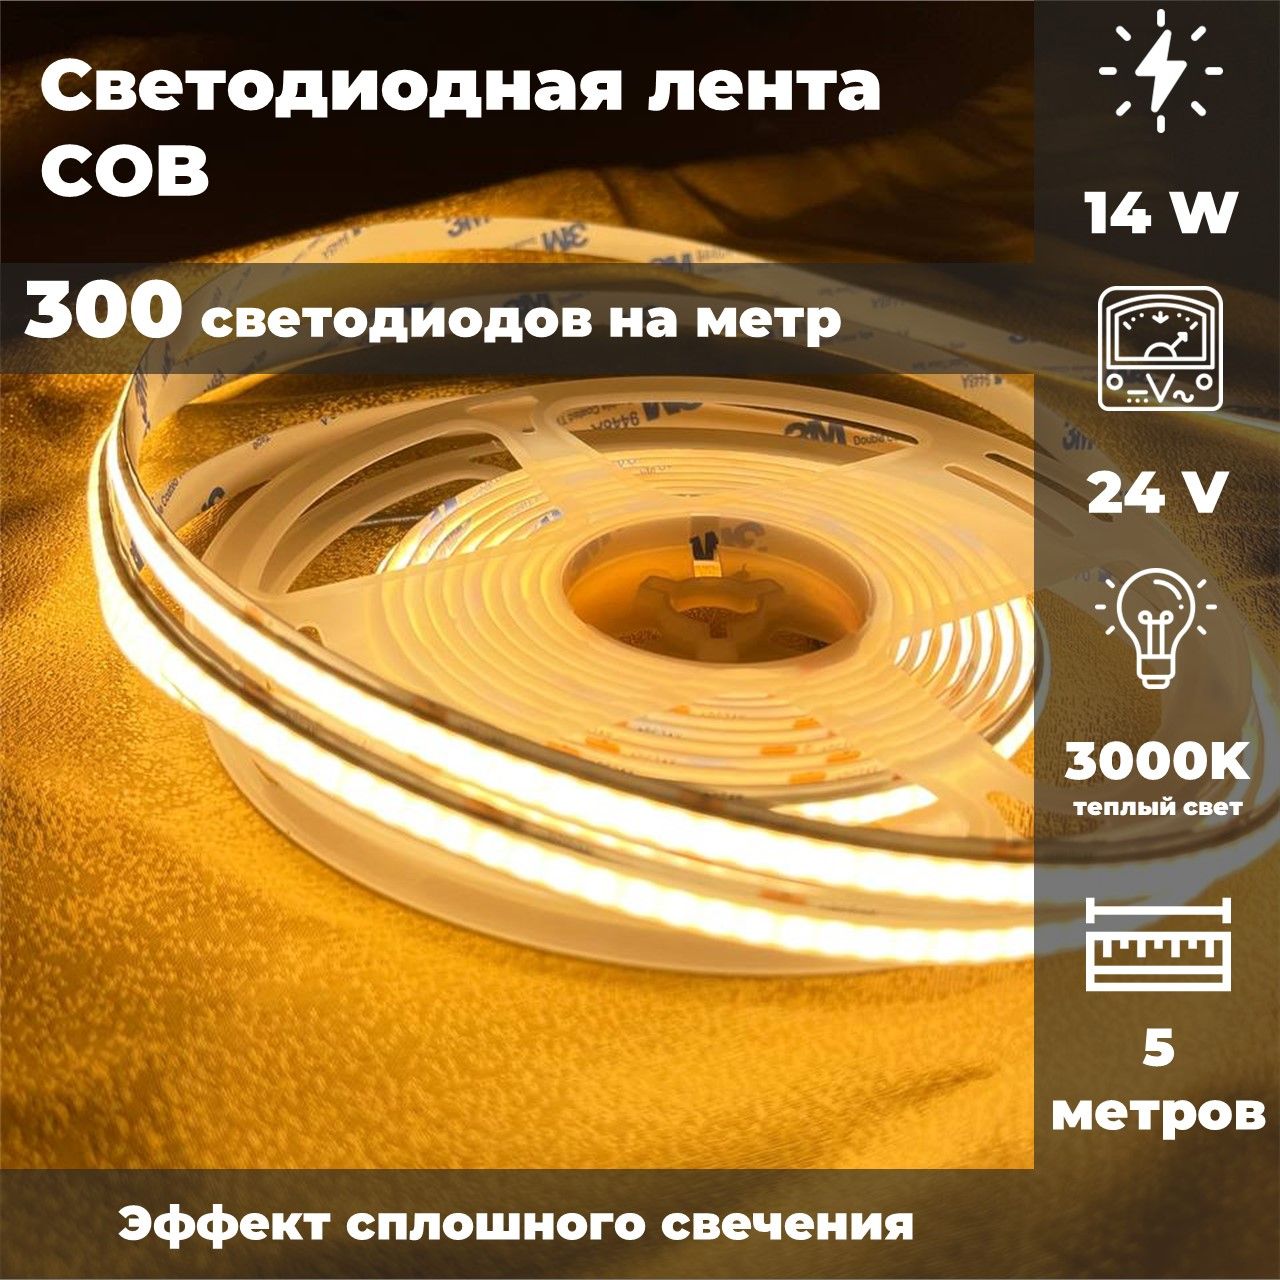 Светодиоднаялента24В14вт/м,COB300светодиодов,3000K(теплыйсветсвет),Redigle